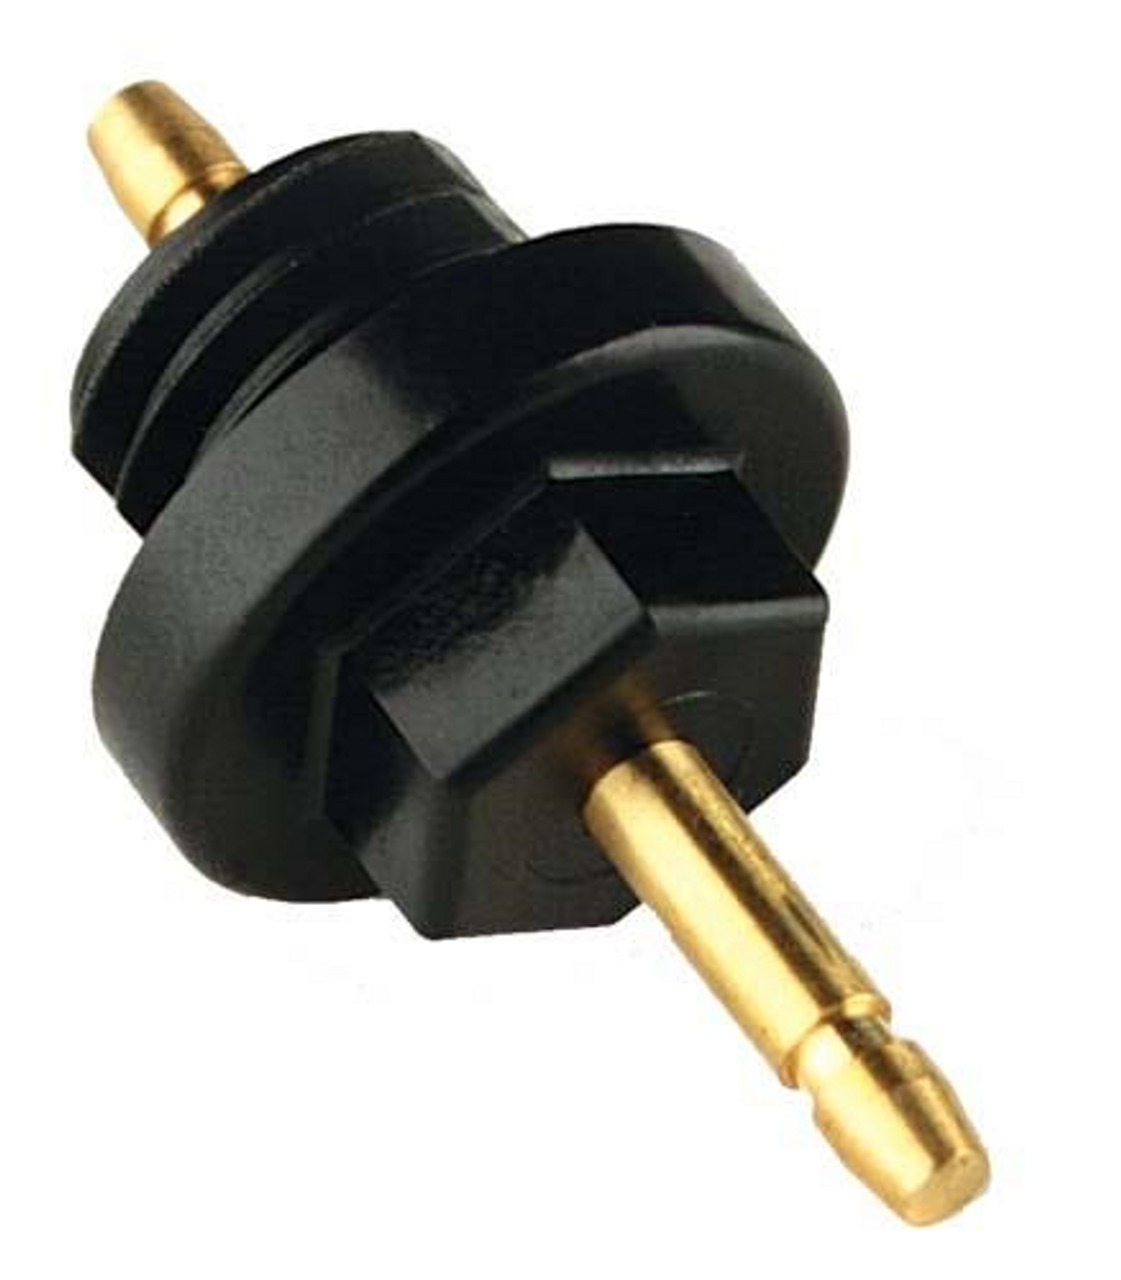 Oil Level Plug for Yamaha G29/Drive, 7830, JT0-15362-00-00